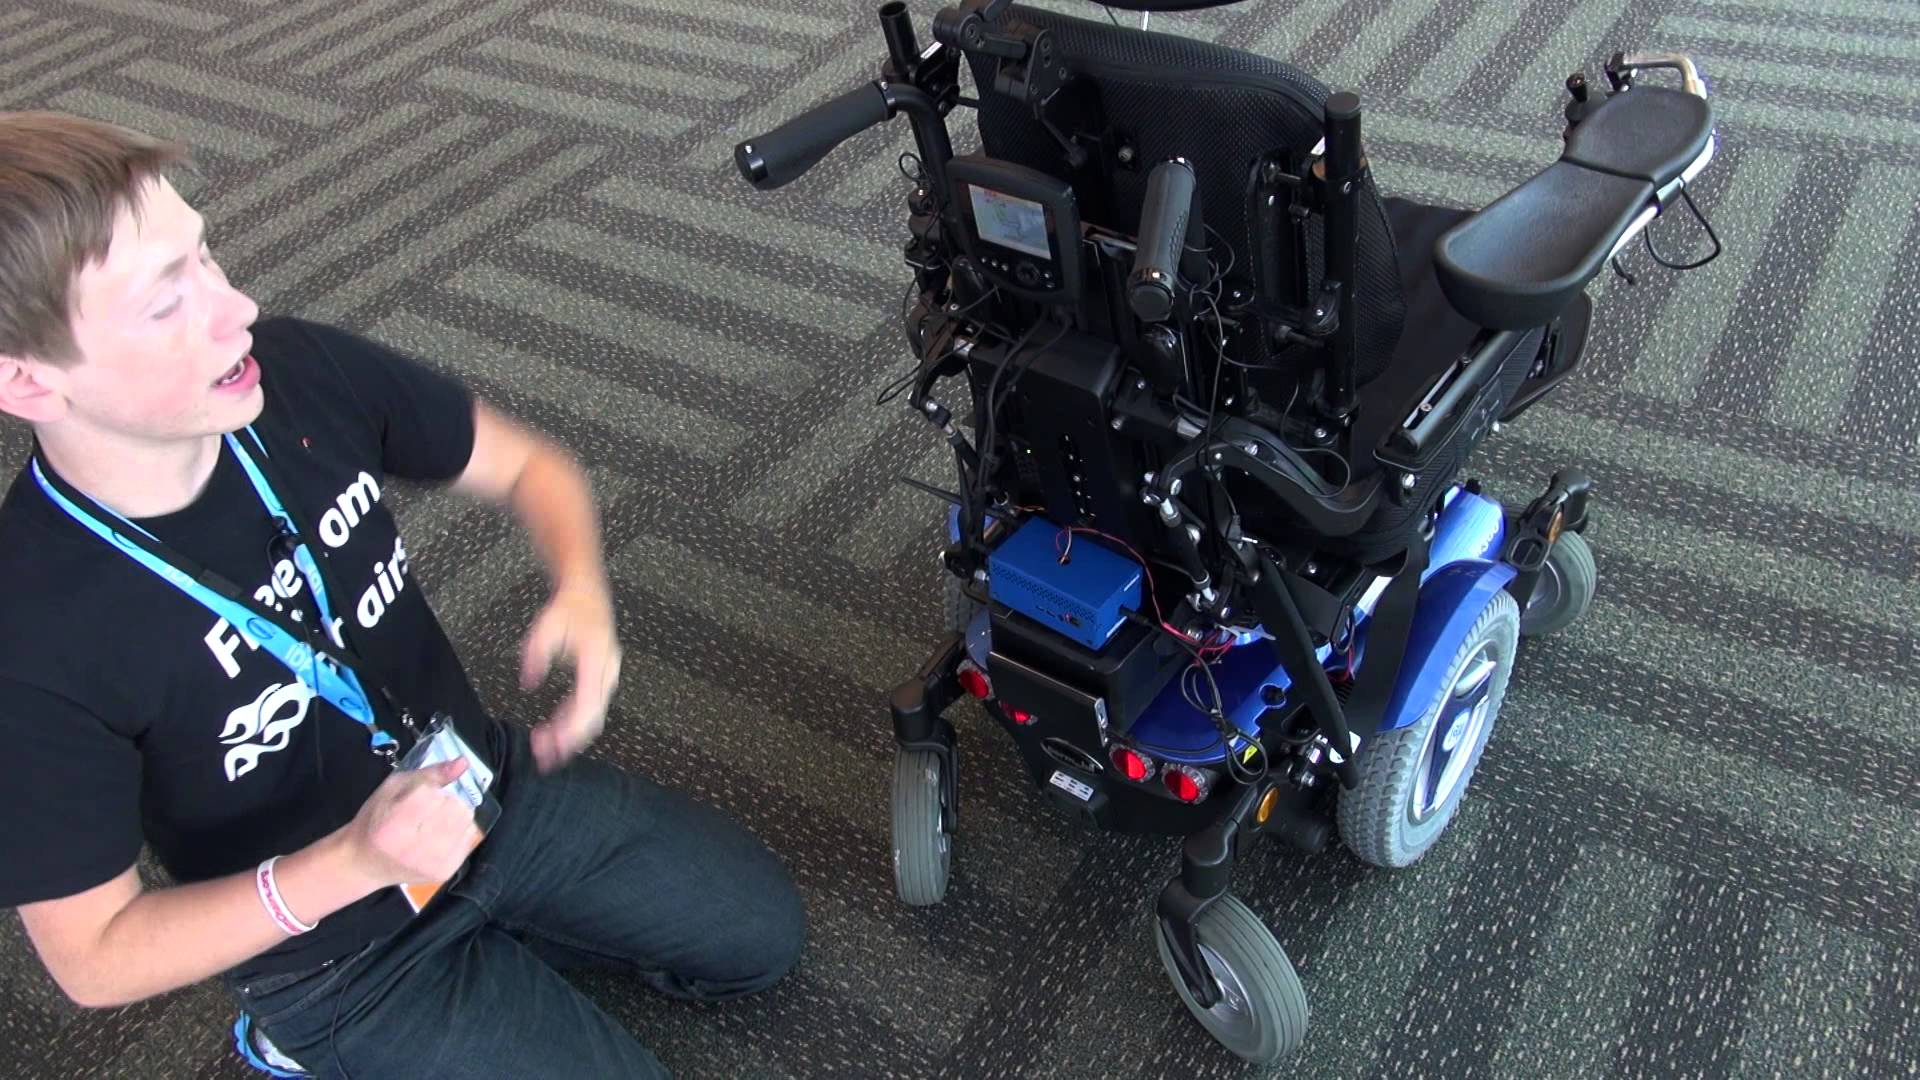 Intel Galileo Smart Wheelchair Project - IDF14 - YouTube